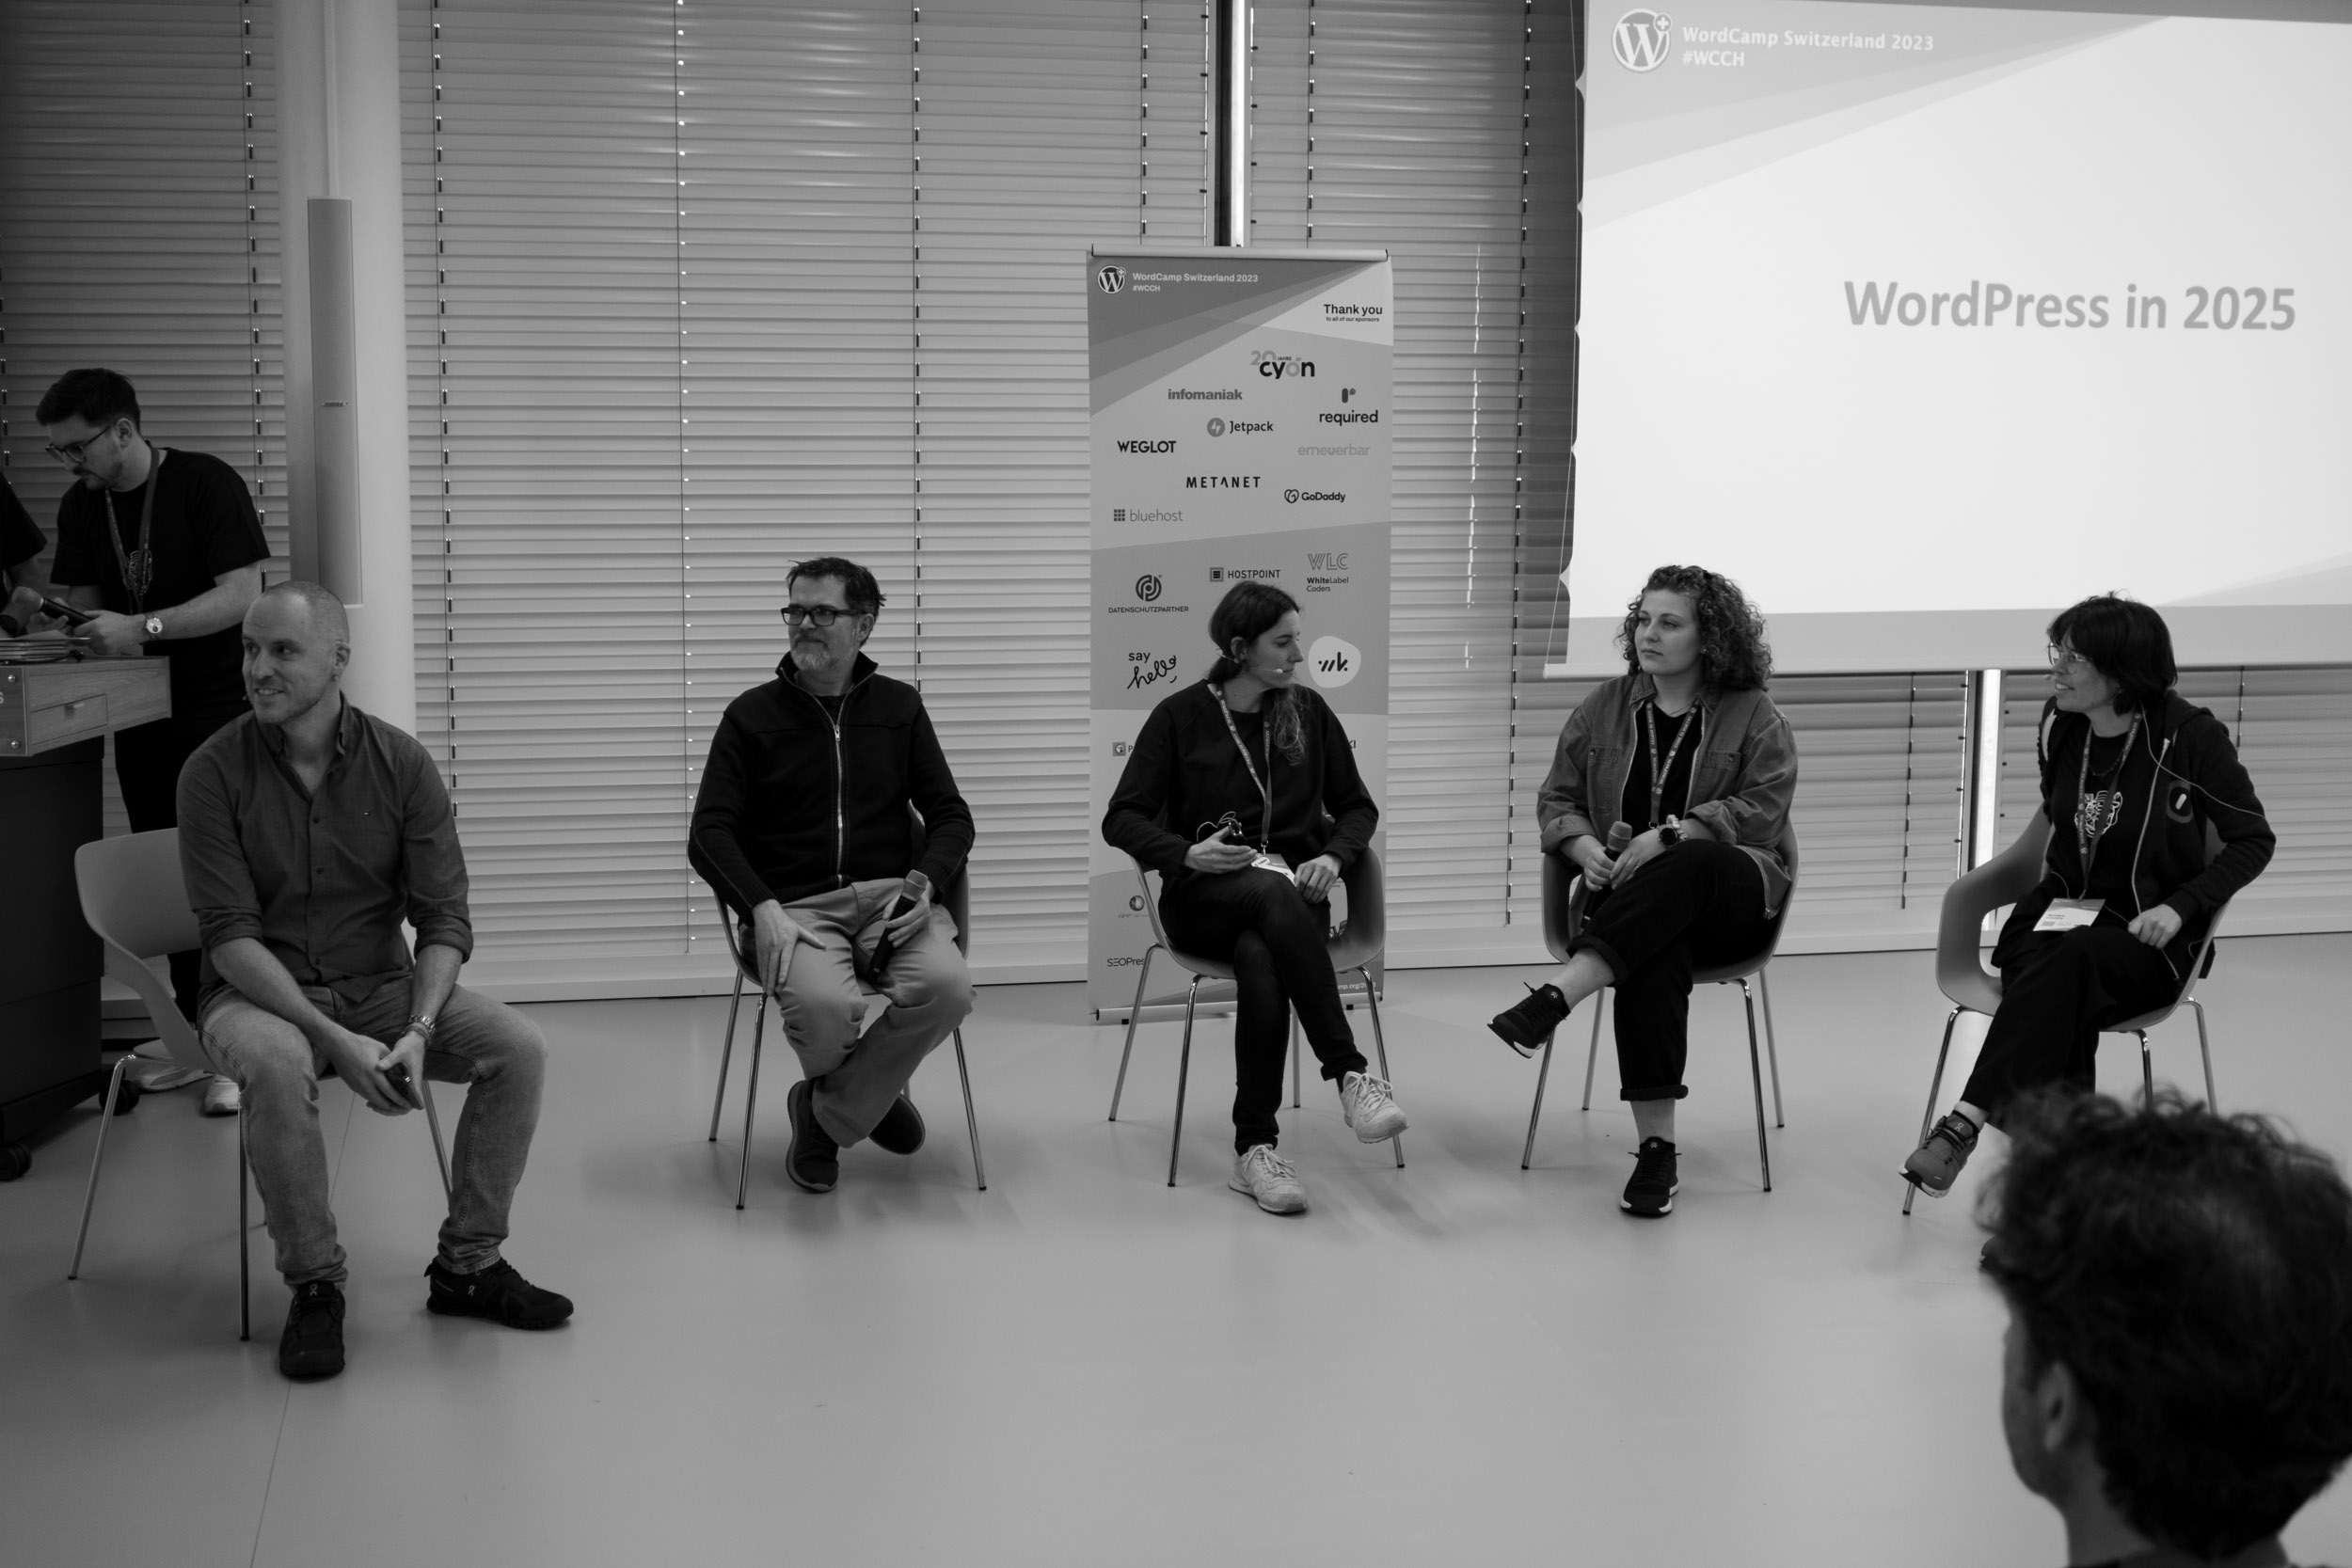 Panel discussion "WordPress in 2025" with Noel Tock, Matt Cromwell, Karin Christen, Simea Merki and Roslyn Lavery.